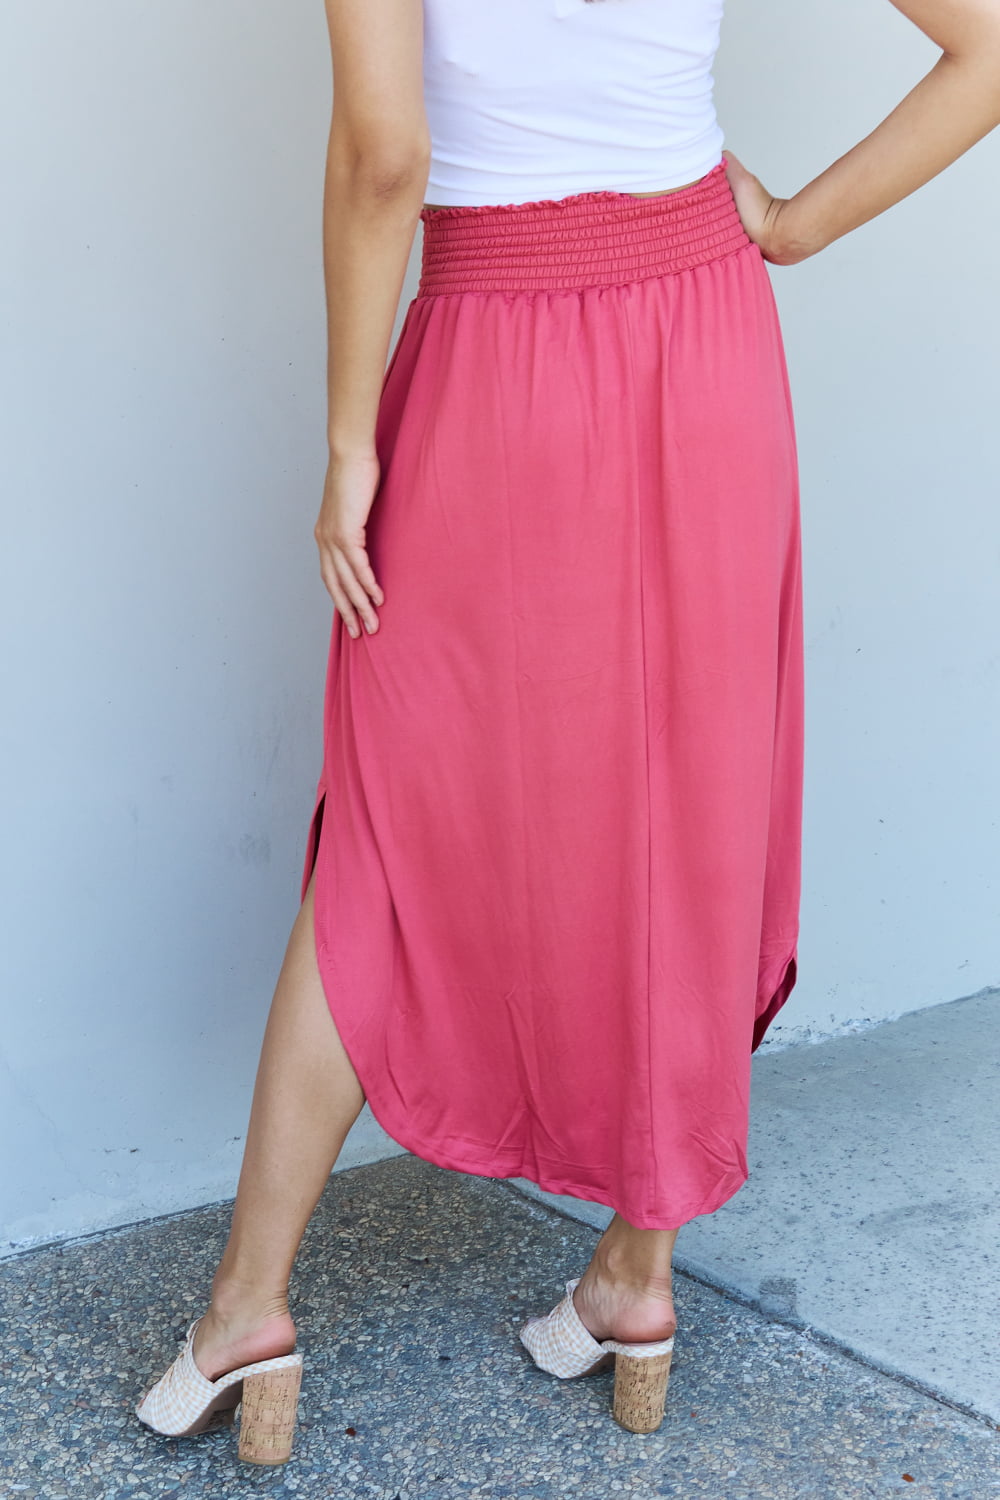 Doublju Comfort Princess High Waist Scoop Hem Maxi Skirt in Hot Pink - Online Only